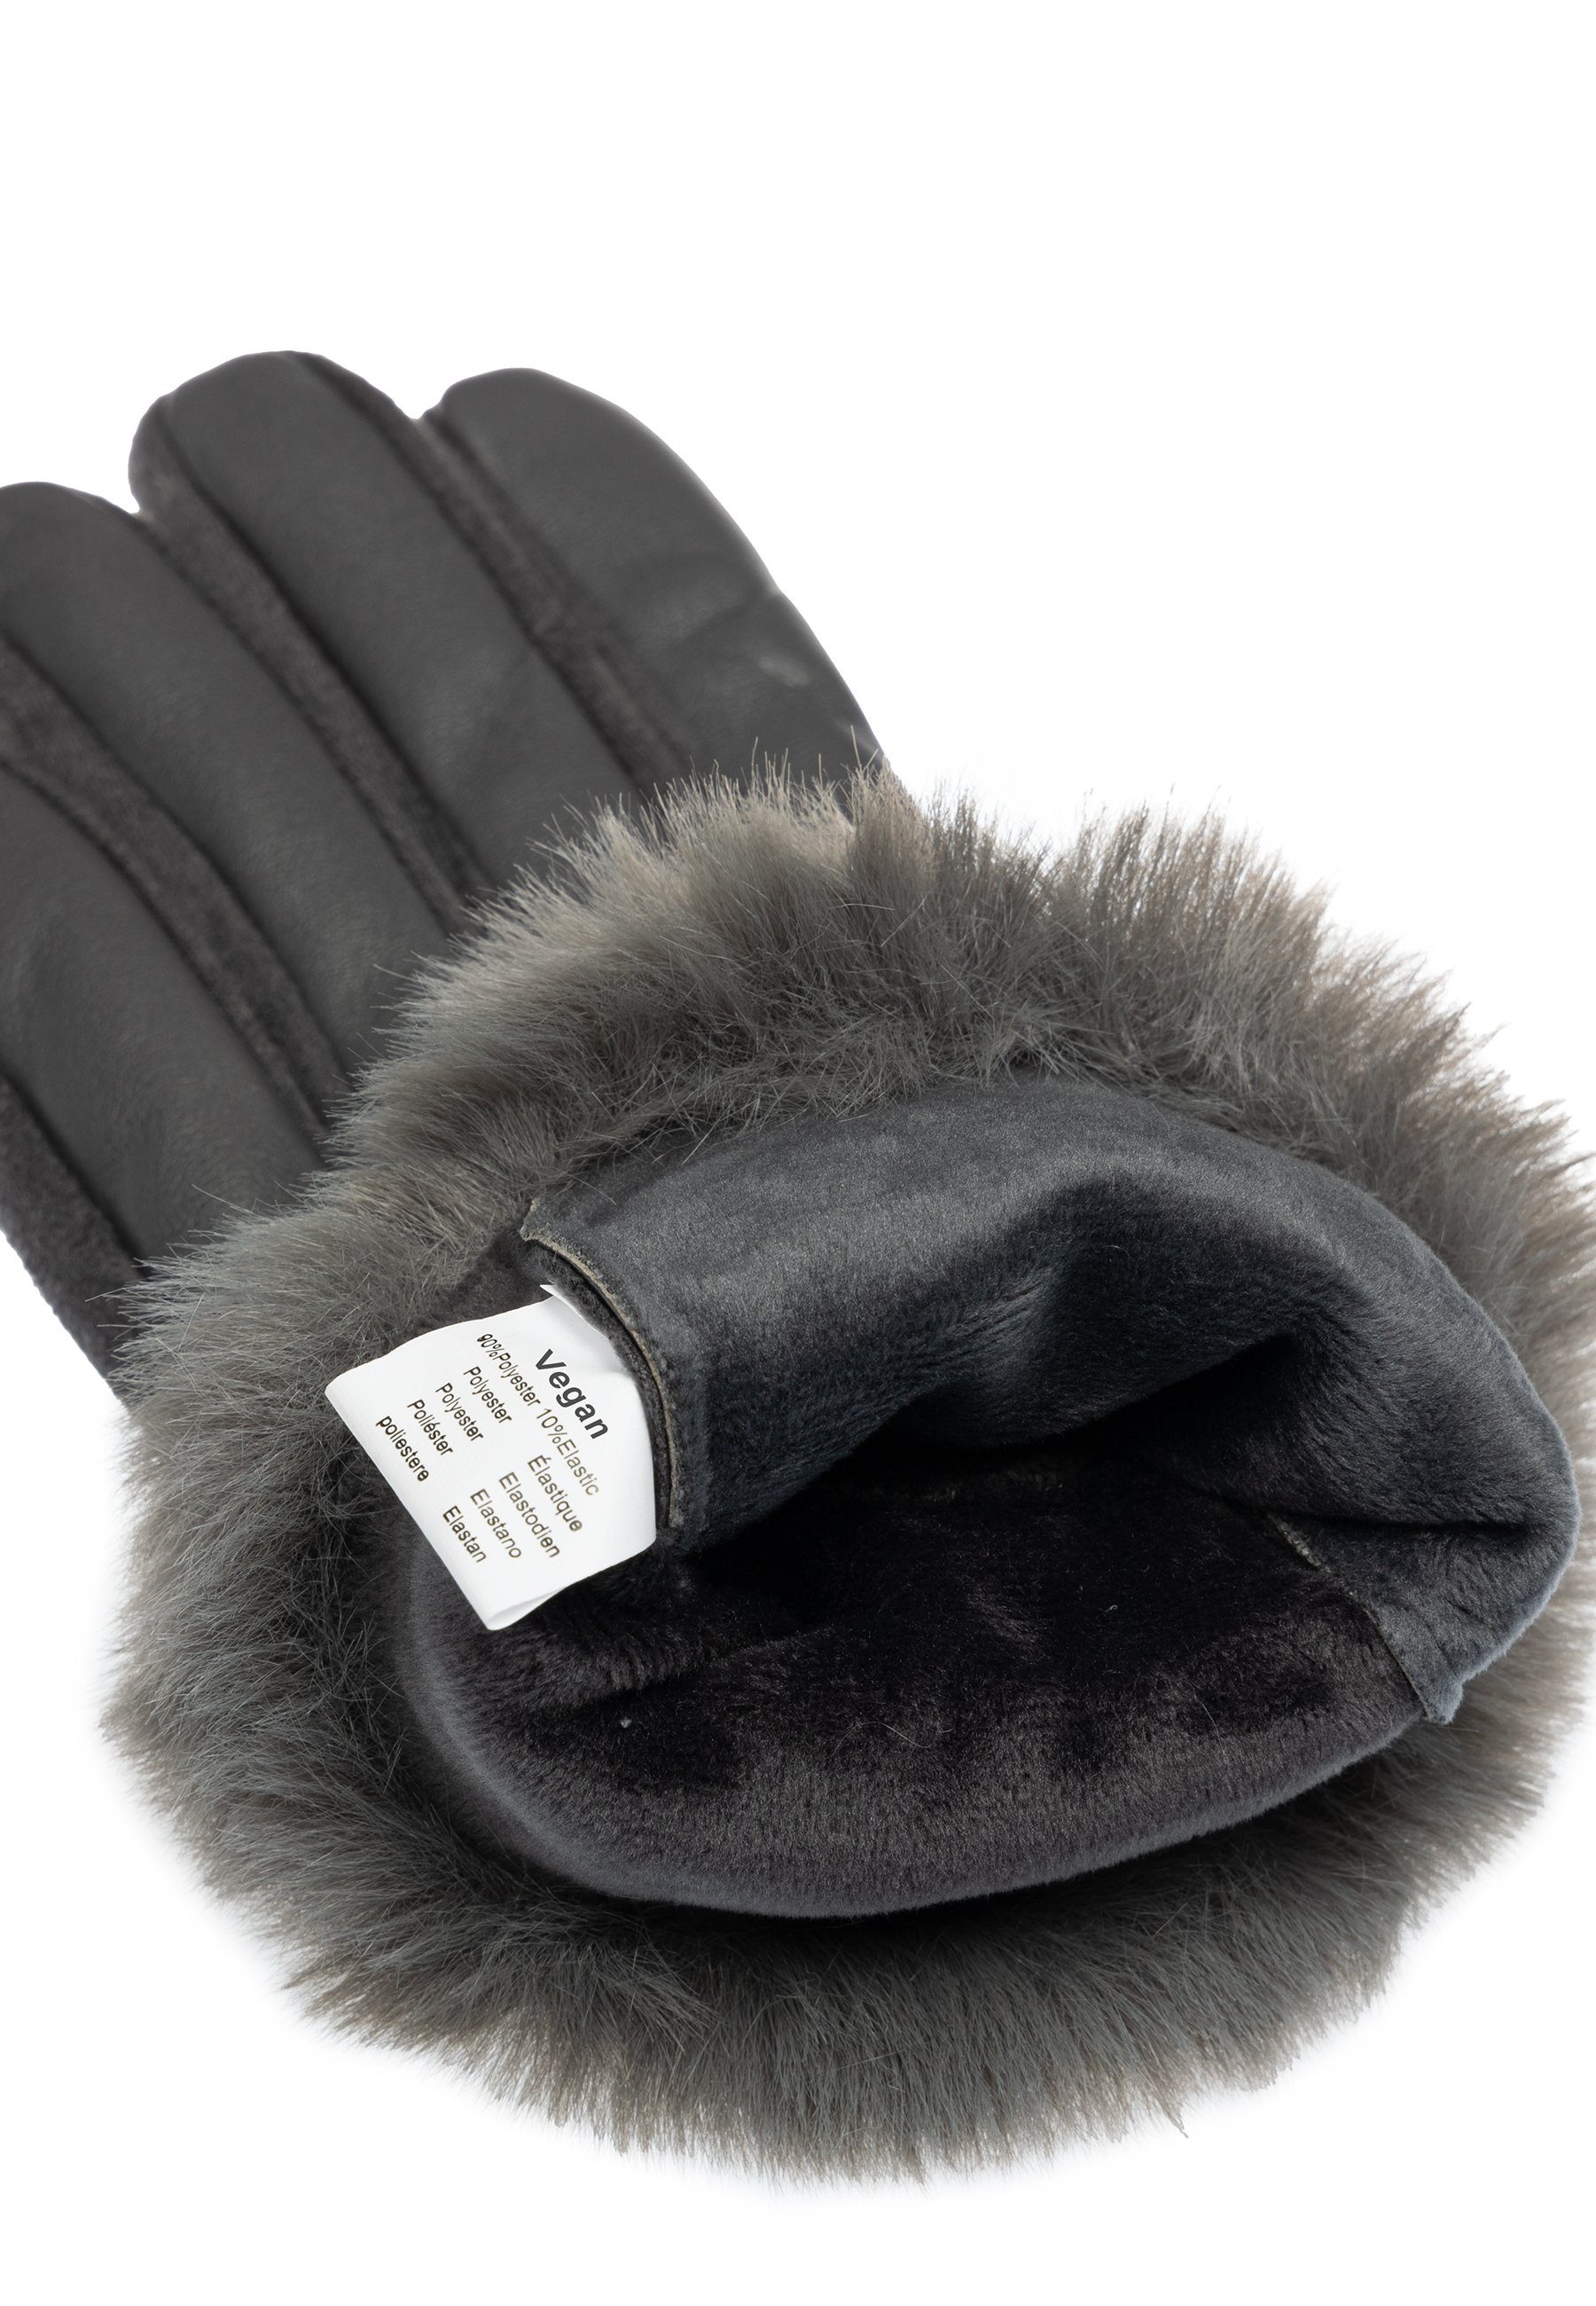 uni GLV017 Strickhandschuhe Handschuhe Fell Caspar Dekor elegante mit klassisch Damen dunkelgrau